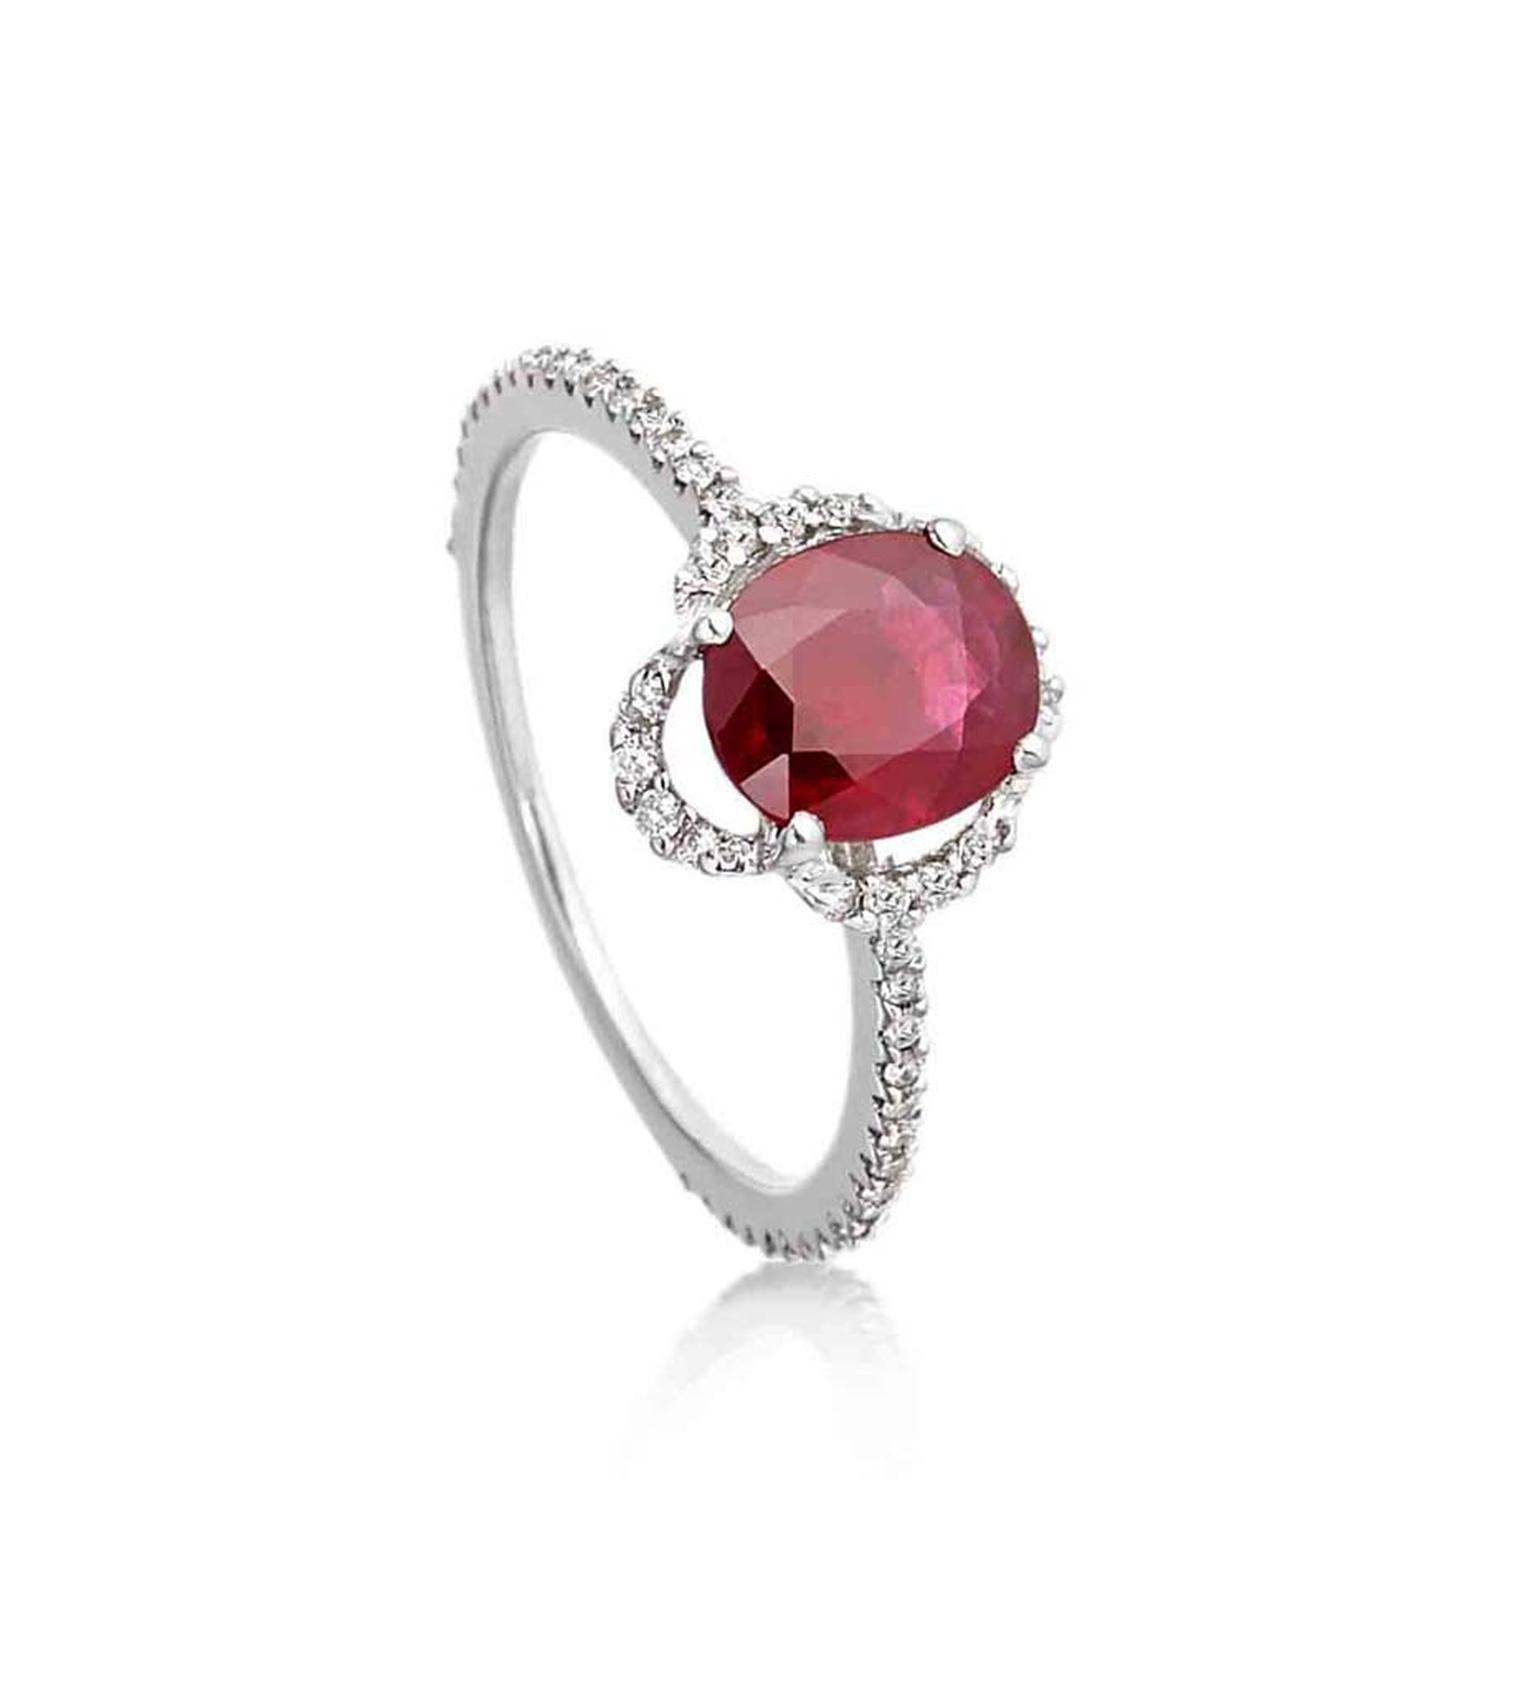 Amrapali ruby and diamond vintage-style engagement ring (£6,800).